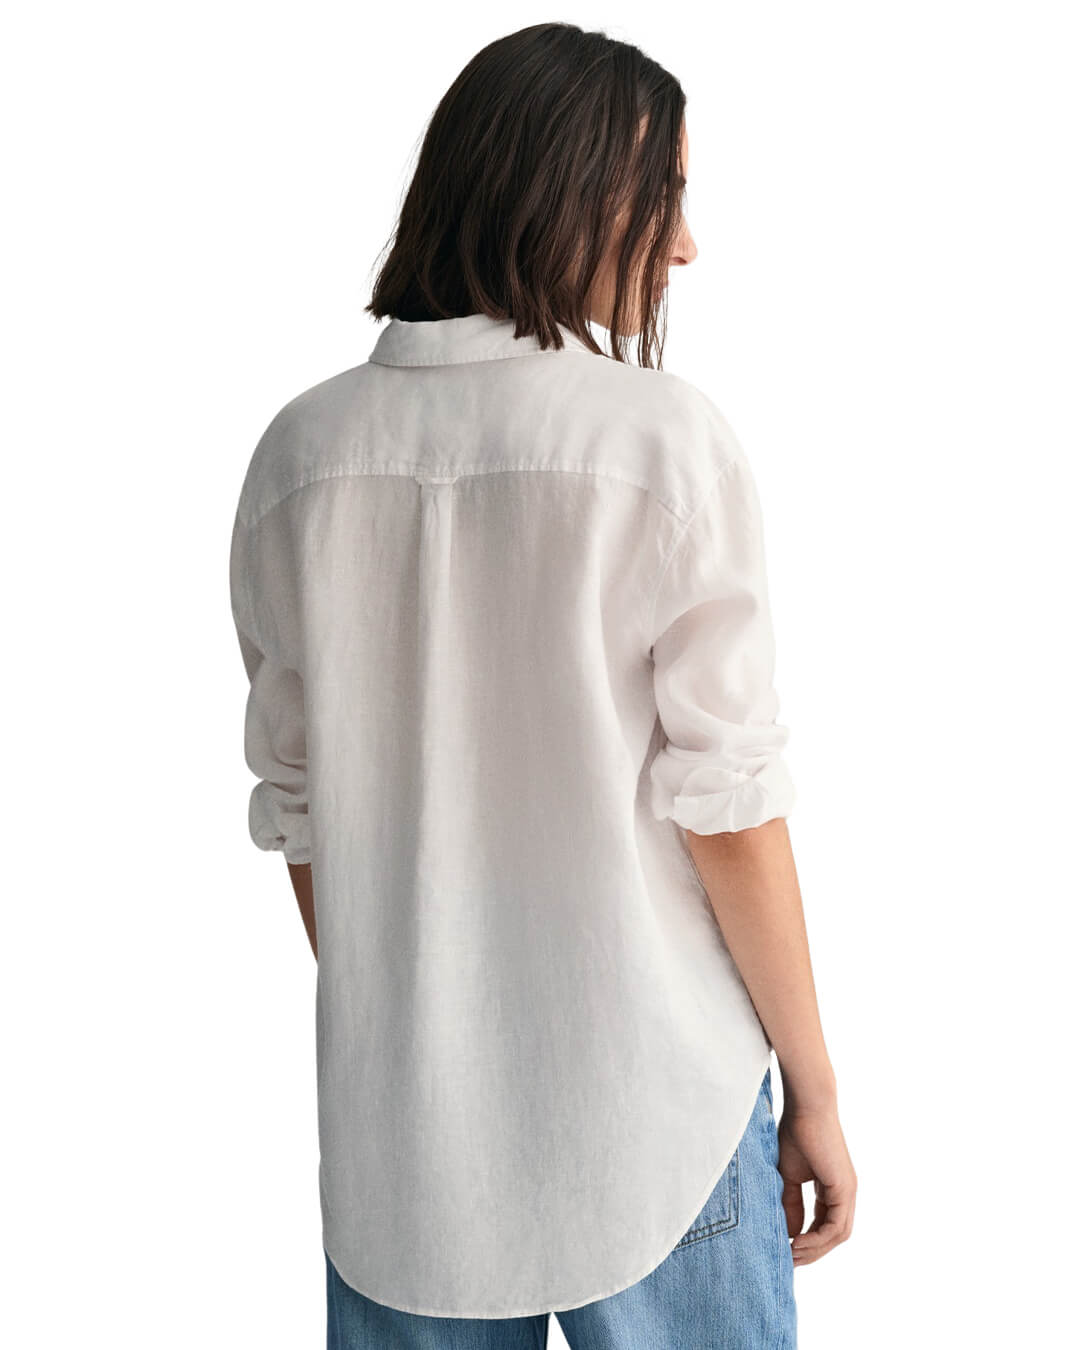 Gant Shirts Gant White Plain Relaxed Linen Shirt